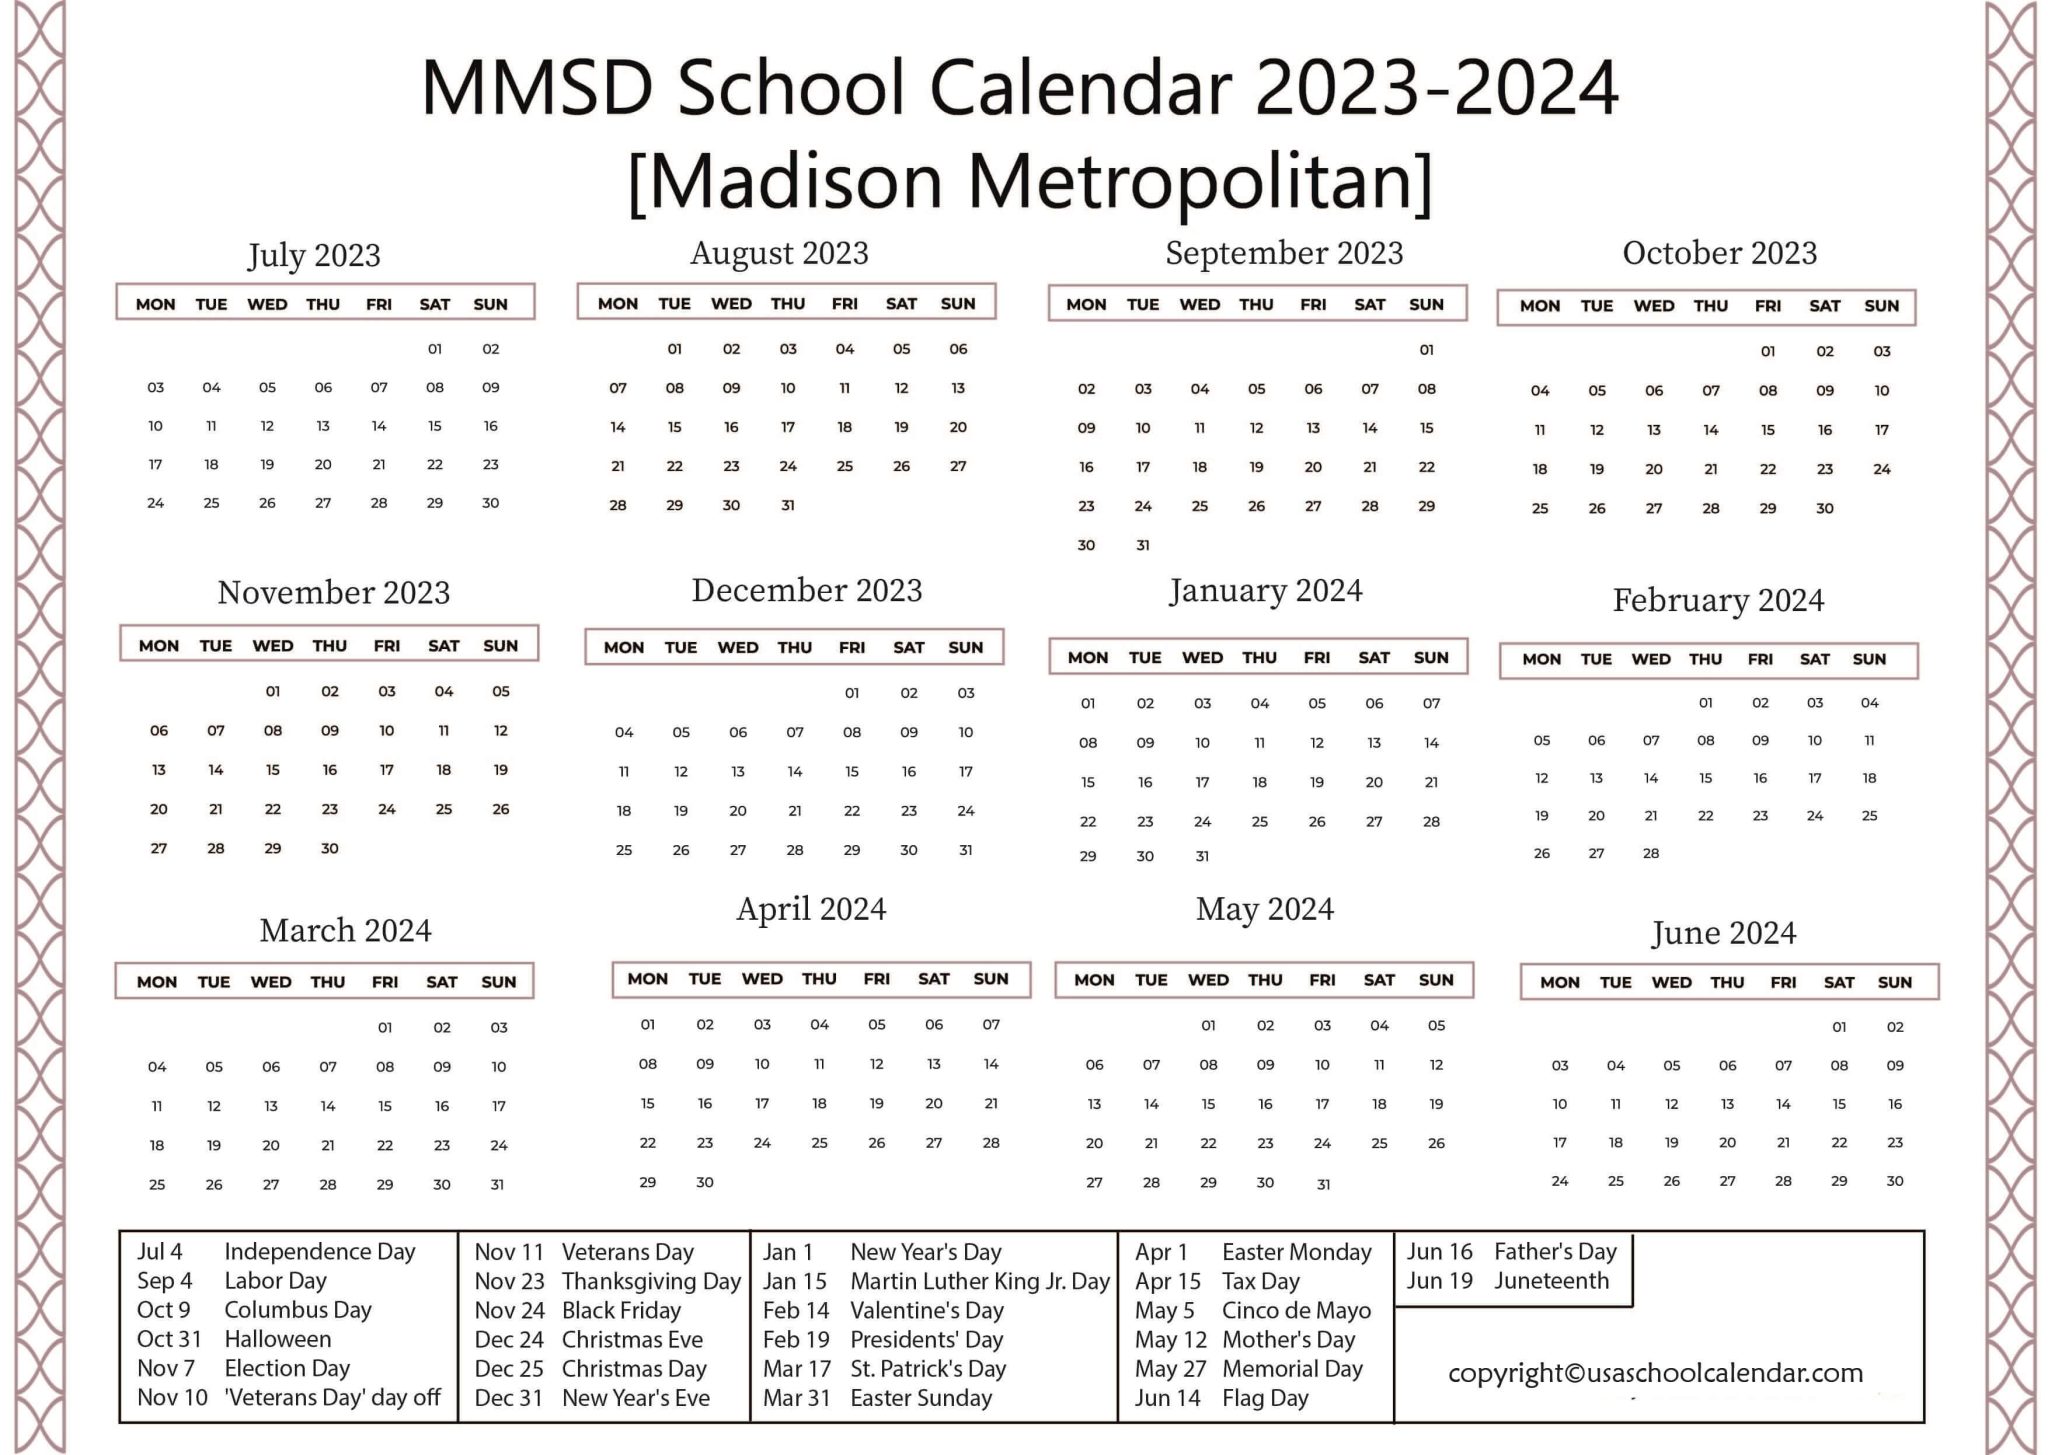 mmsd-school-calendar-2023-2024-madison-metropolitan